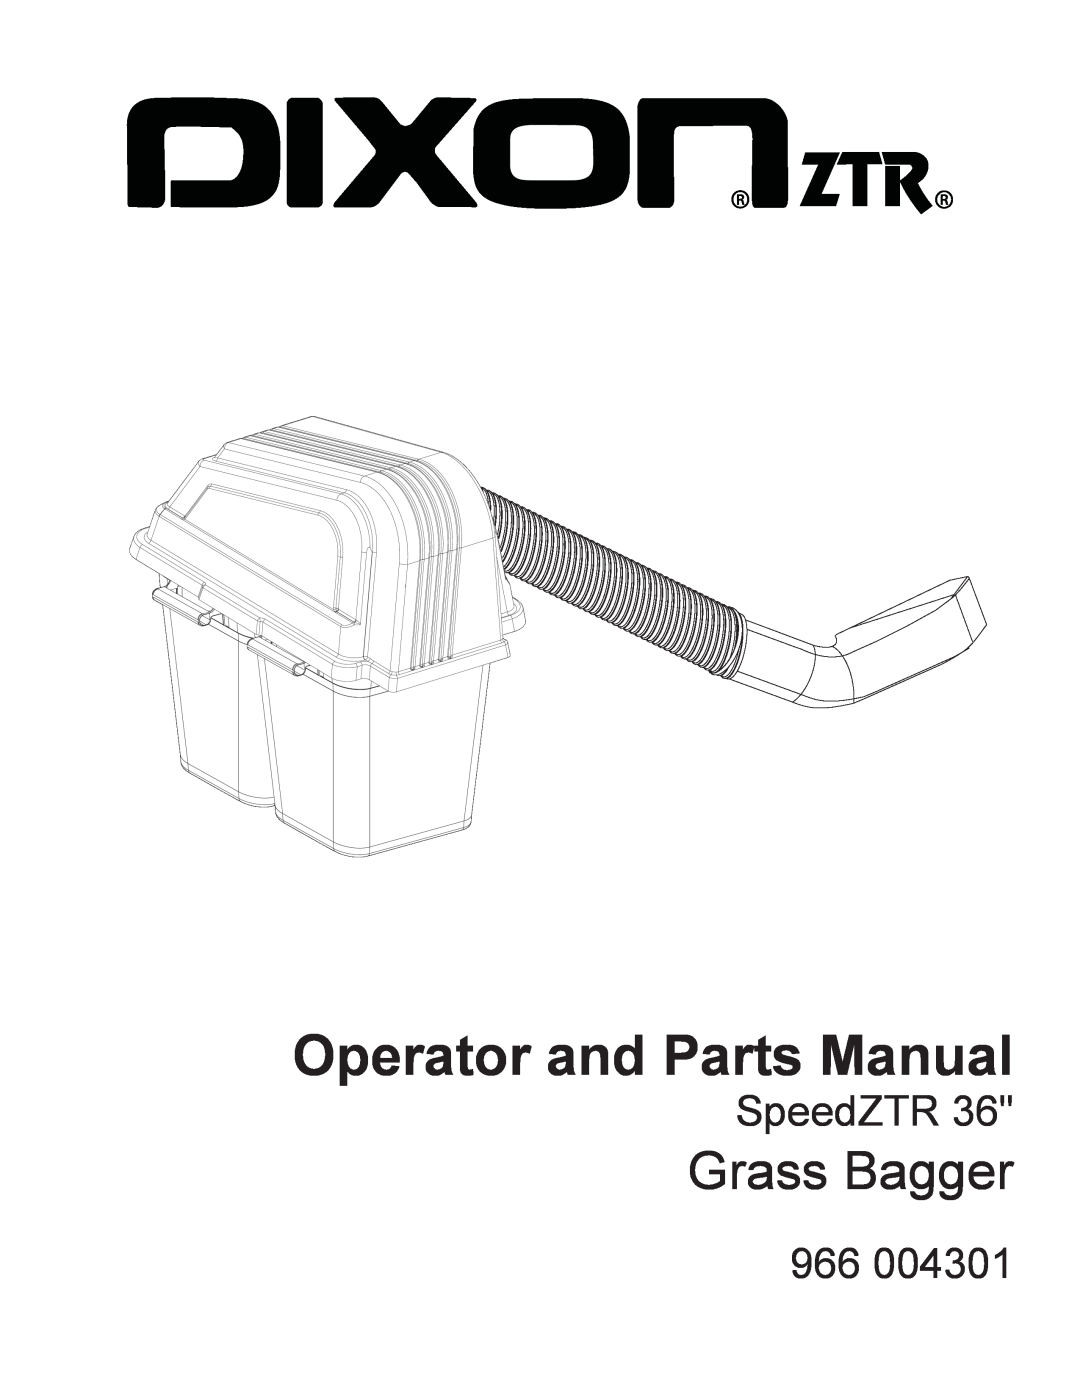 Dixon 115 150227, 966 004301 manual Operator and Parts Manual, Grass Bagger, SpeedZTR 